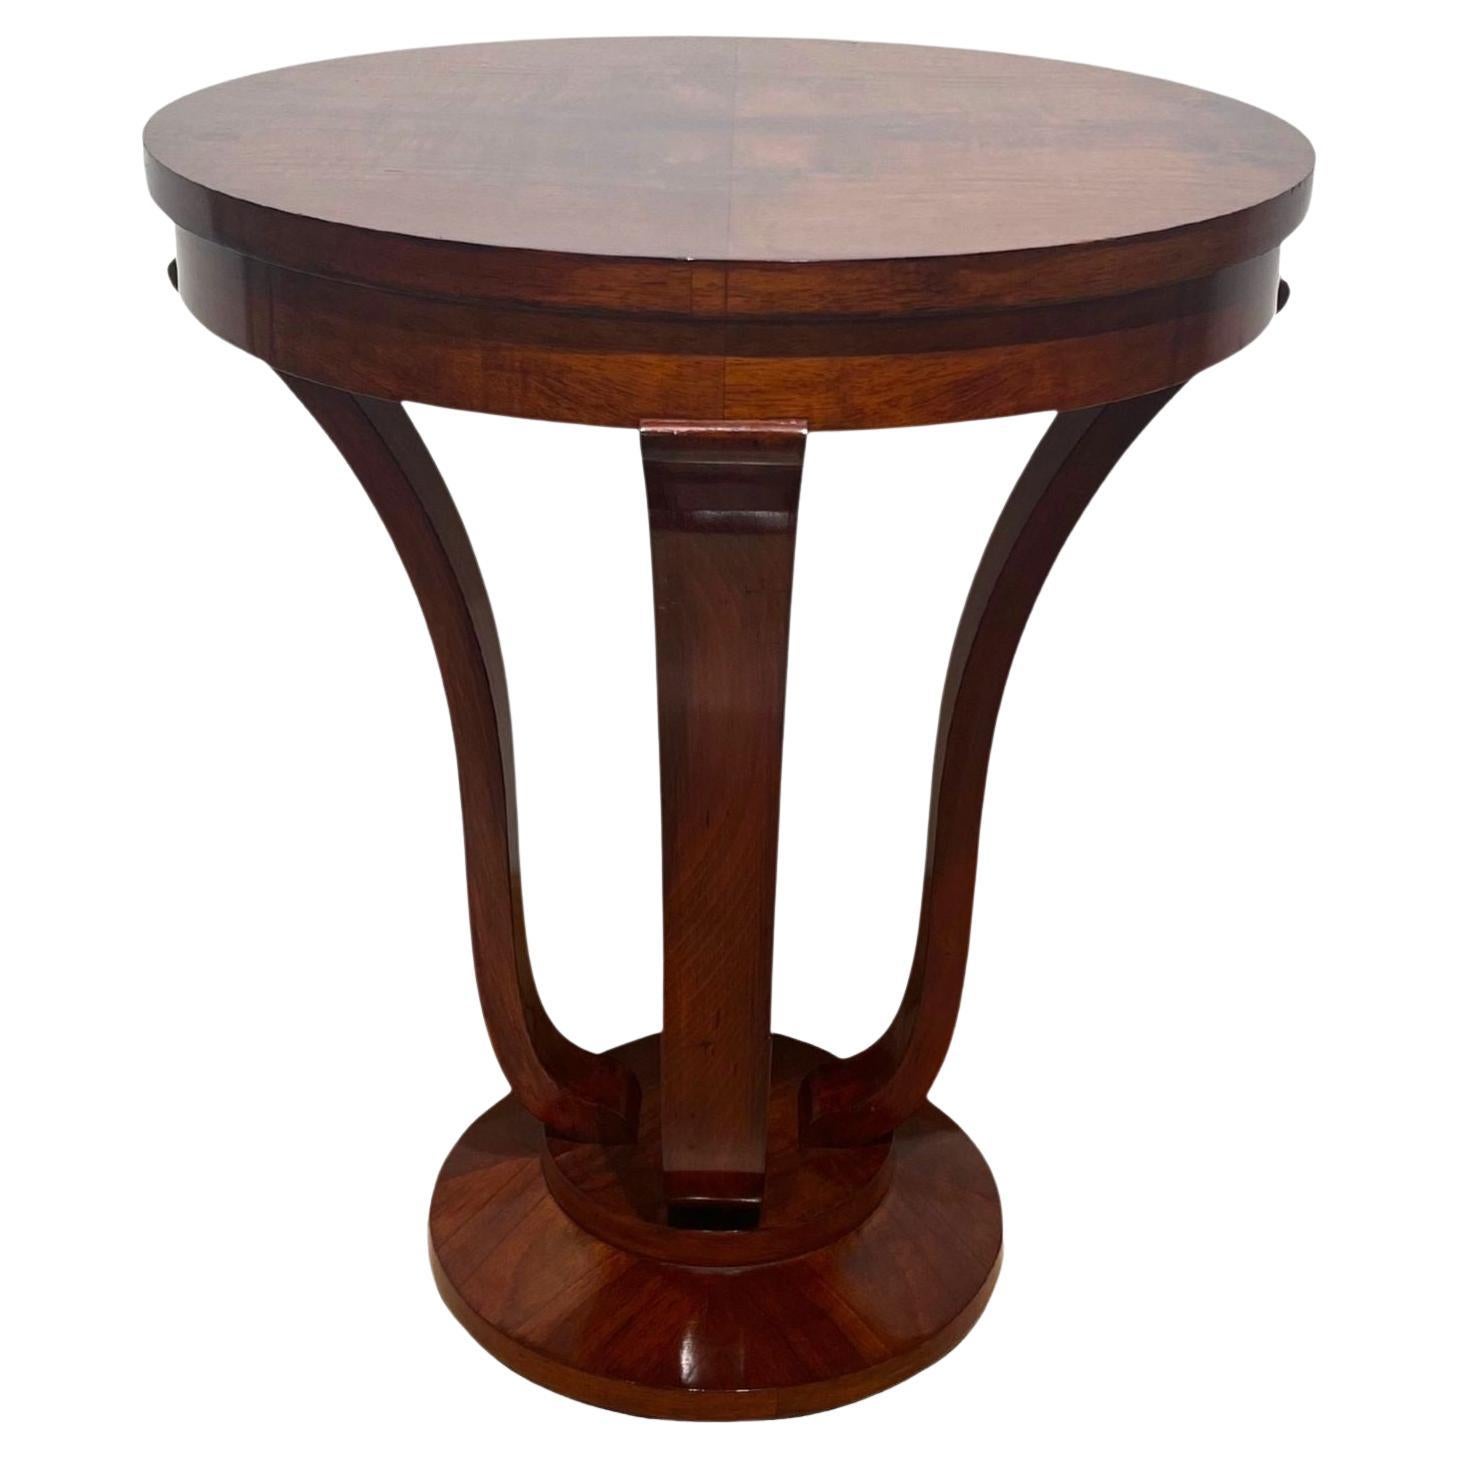 Round Art Deco Side Table, Walnut Veneer, France, circa 1930